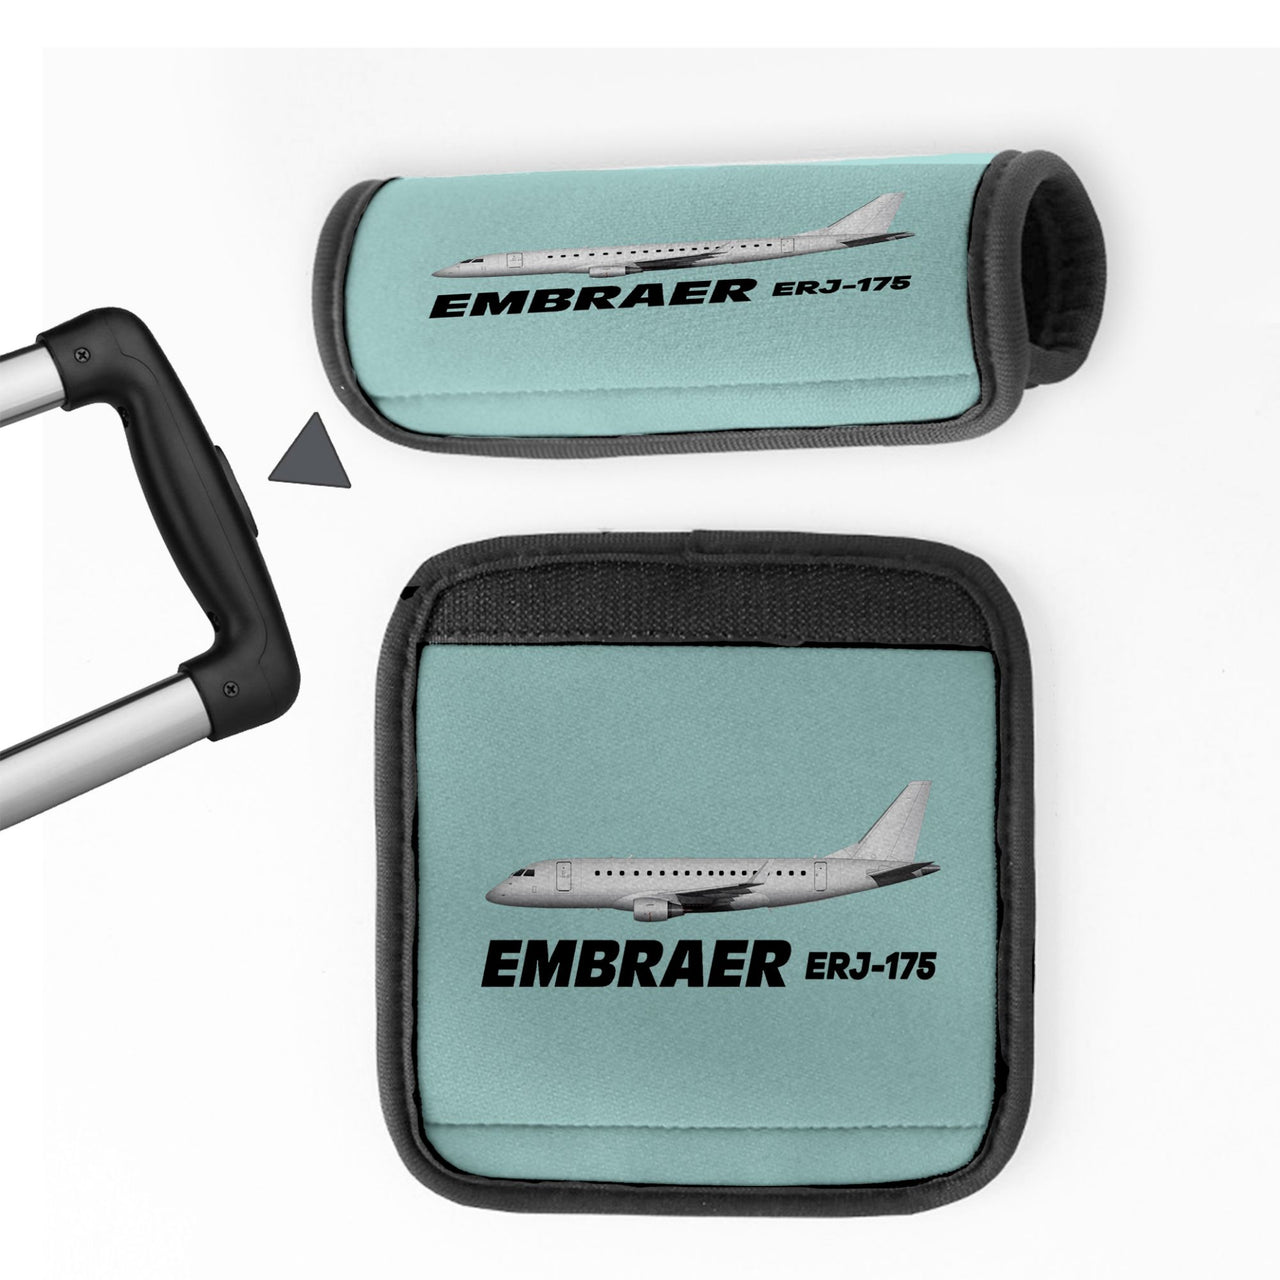 The Embraer ERJ-175 Designed Neoprene Luggage Handle Covers